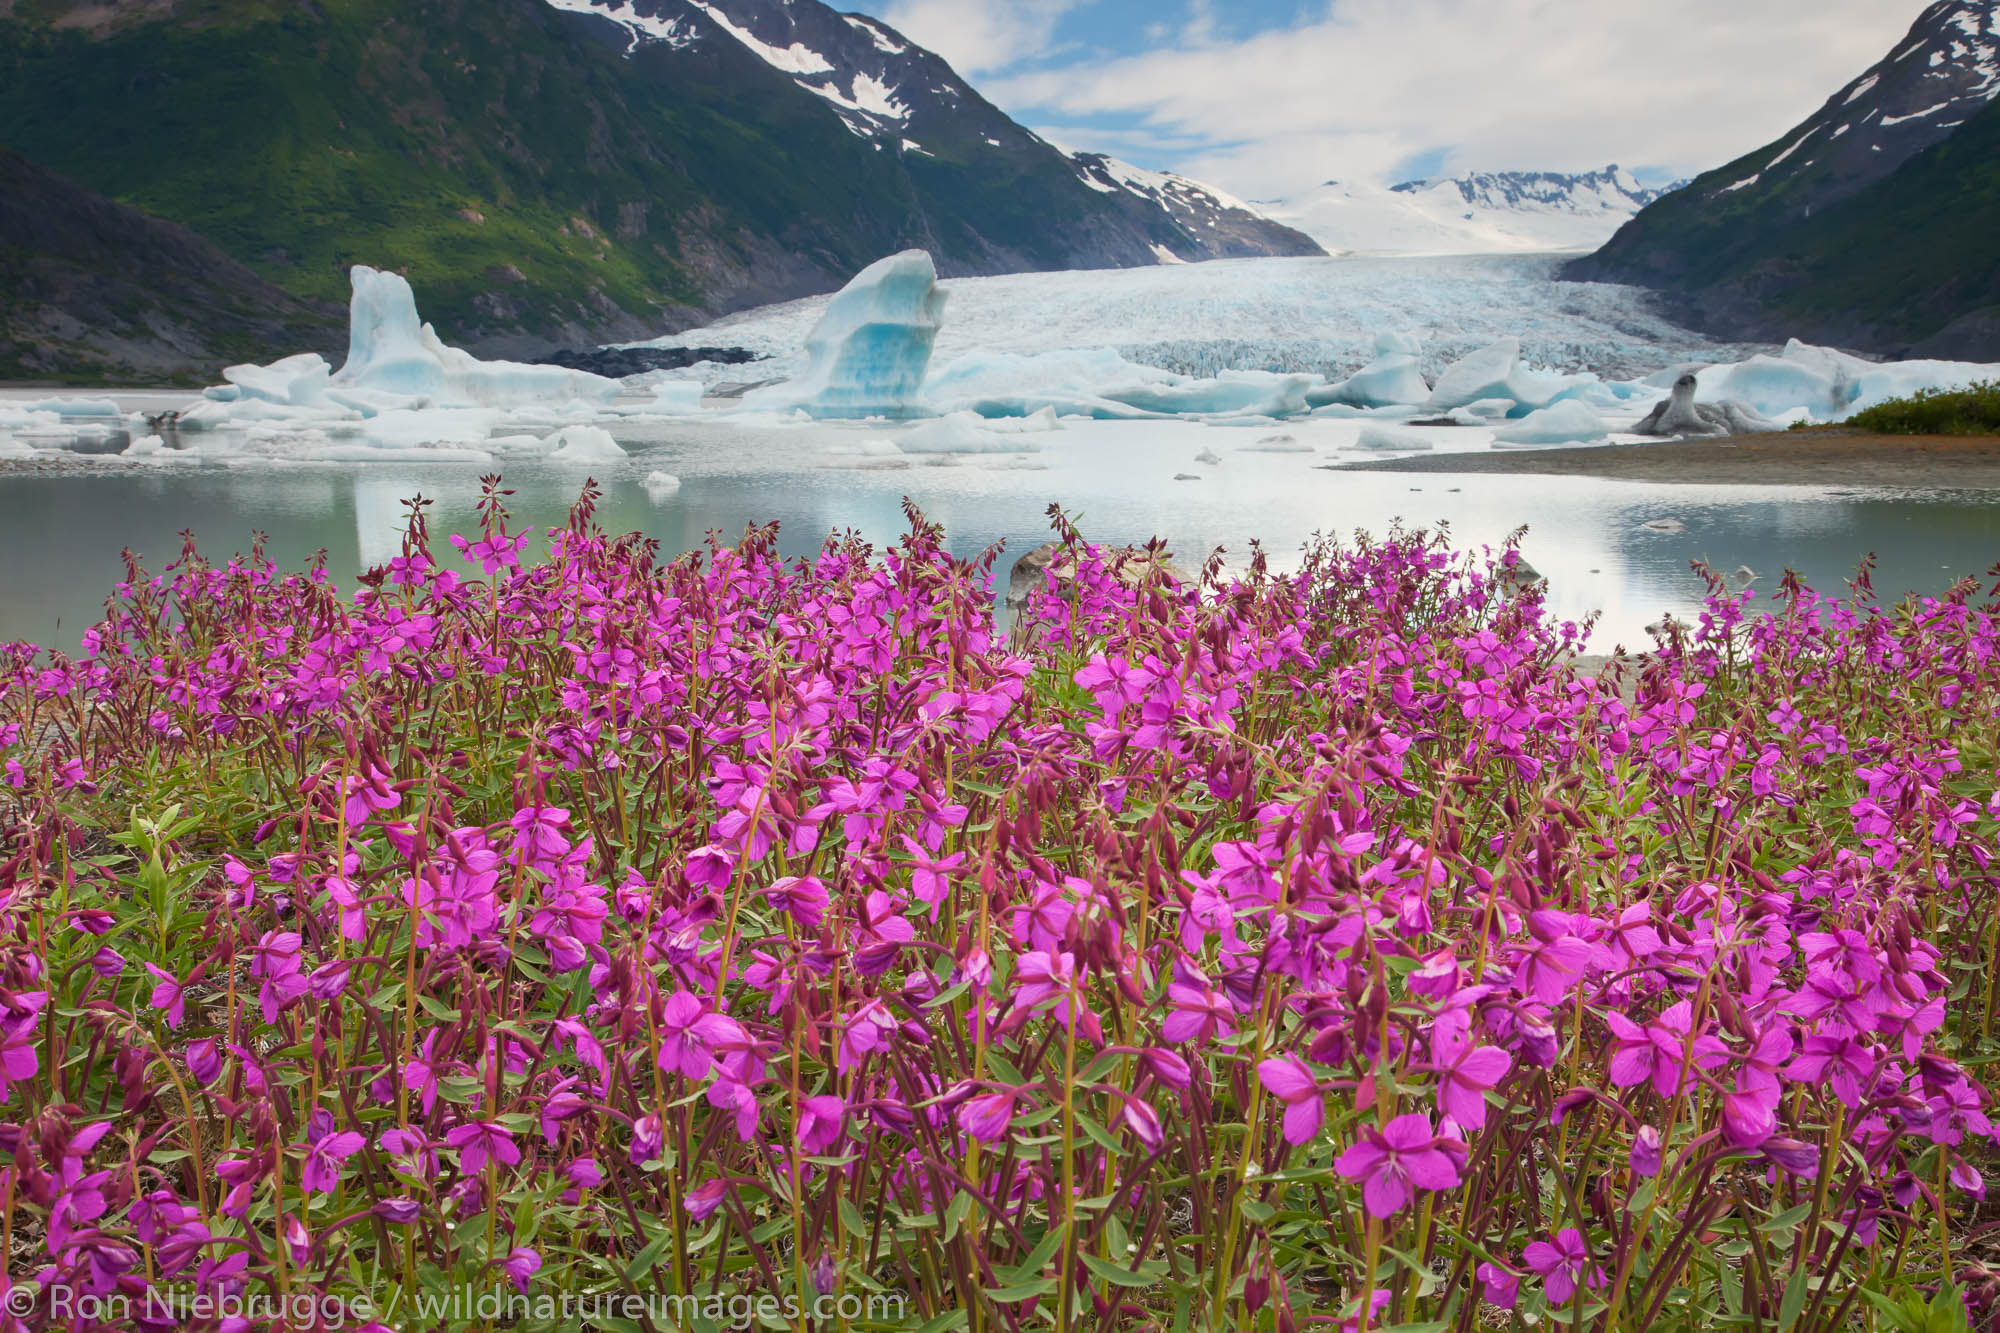 Wildflowers at Spencer Glacier, Chugach National Forest, Alaska.